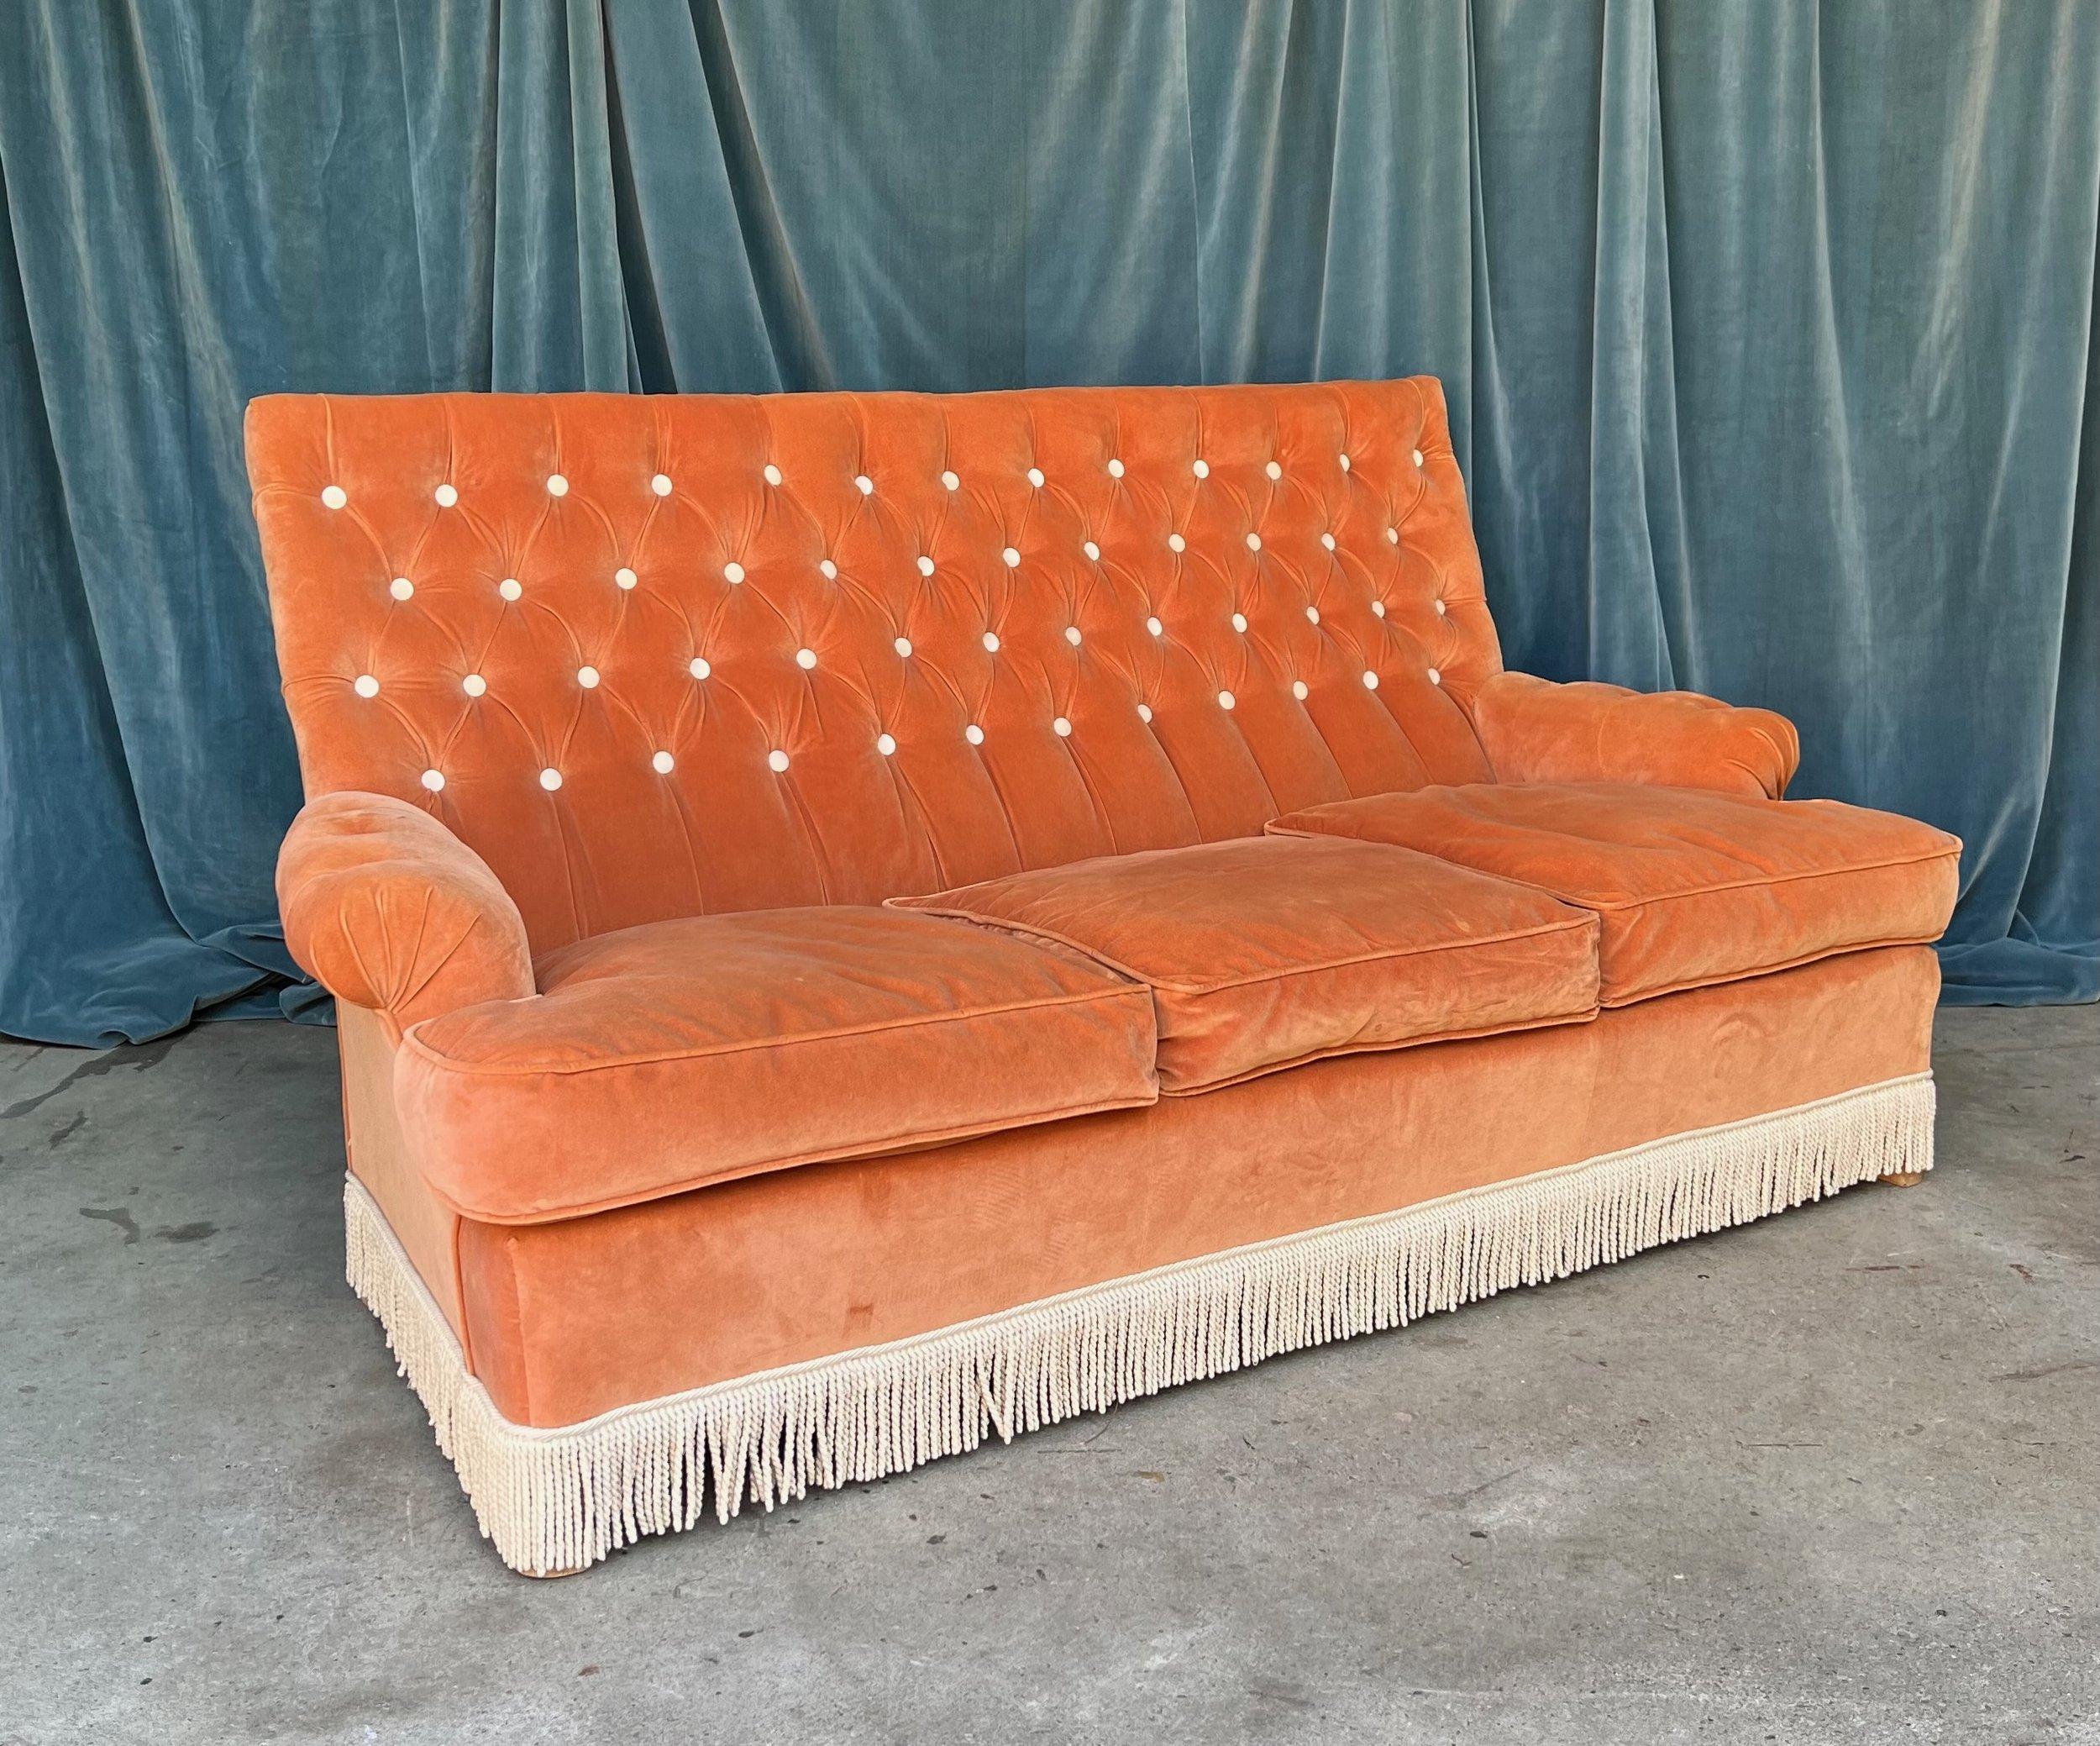 Upholstery French Napoleon III Sofa in Pale Orange Velvet and White Fringe For Sale